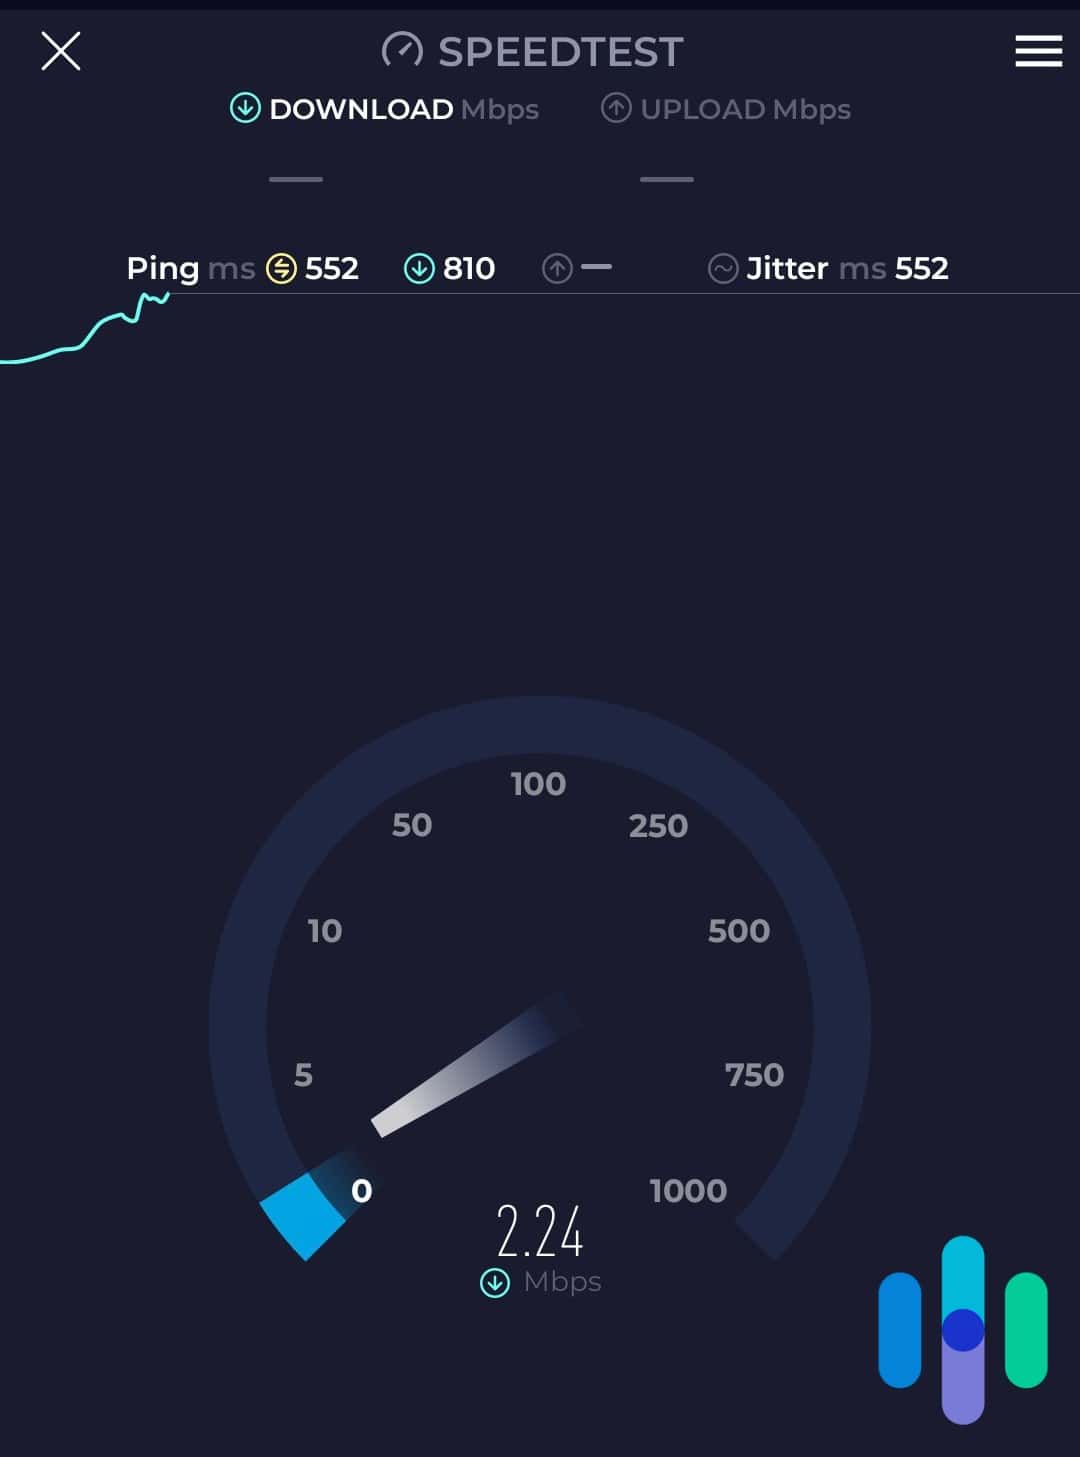 Slow internet speed test result